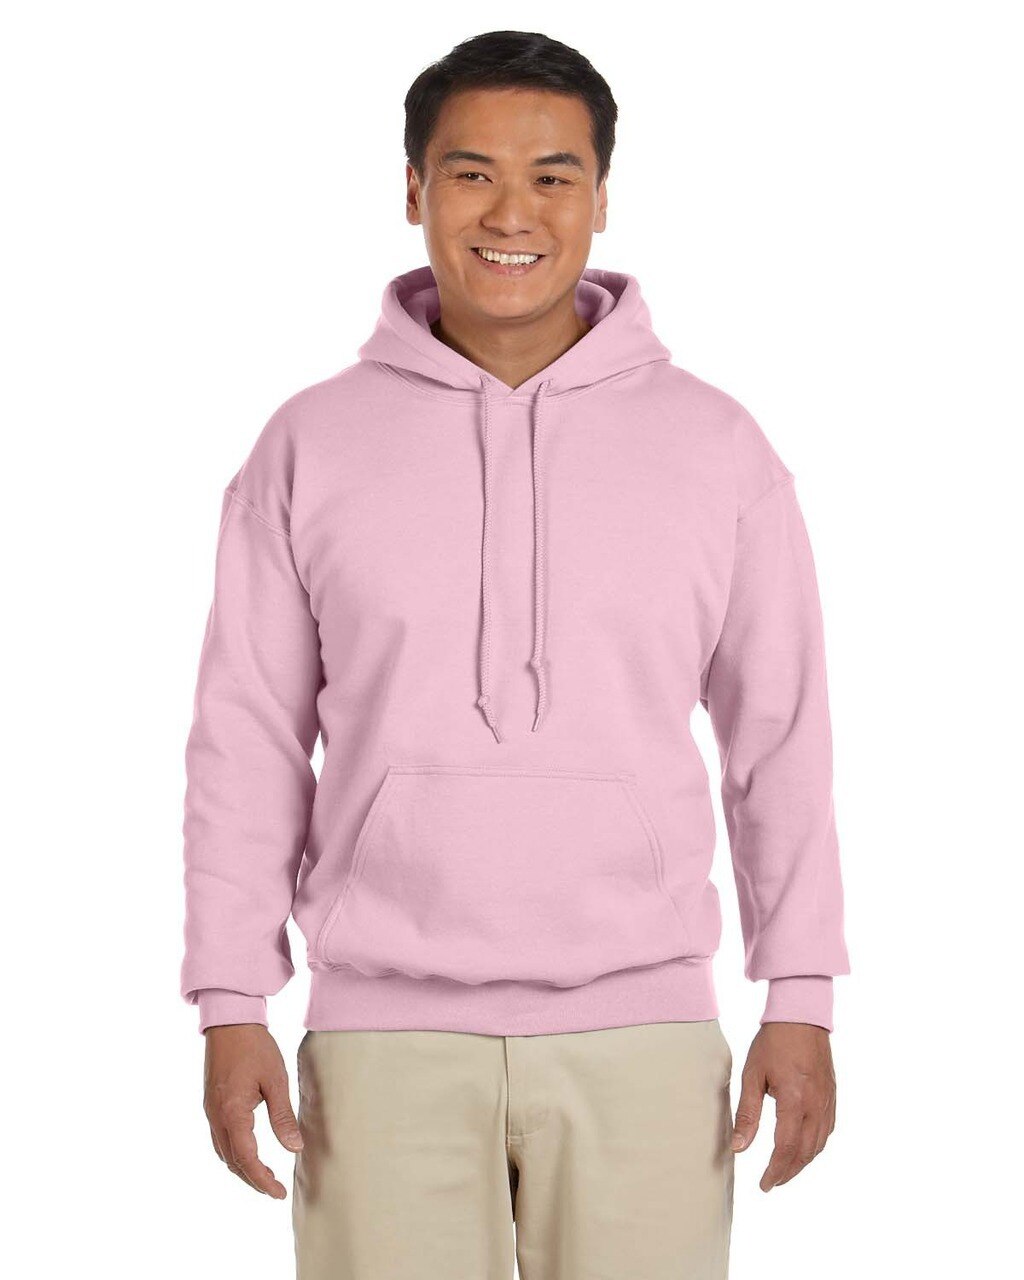 Gildan Adult Unisex 50/50 Hoodie Sweatshirt